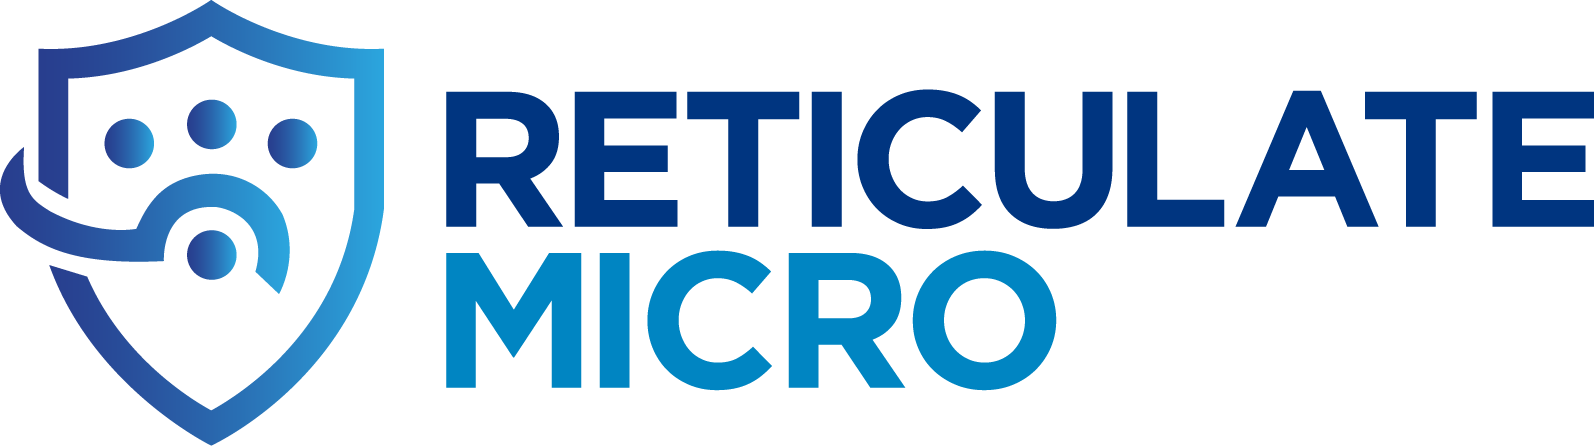 Reticulate-Micro-Logo